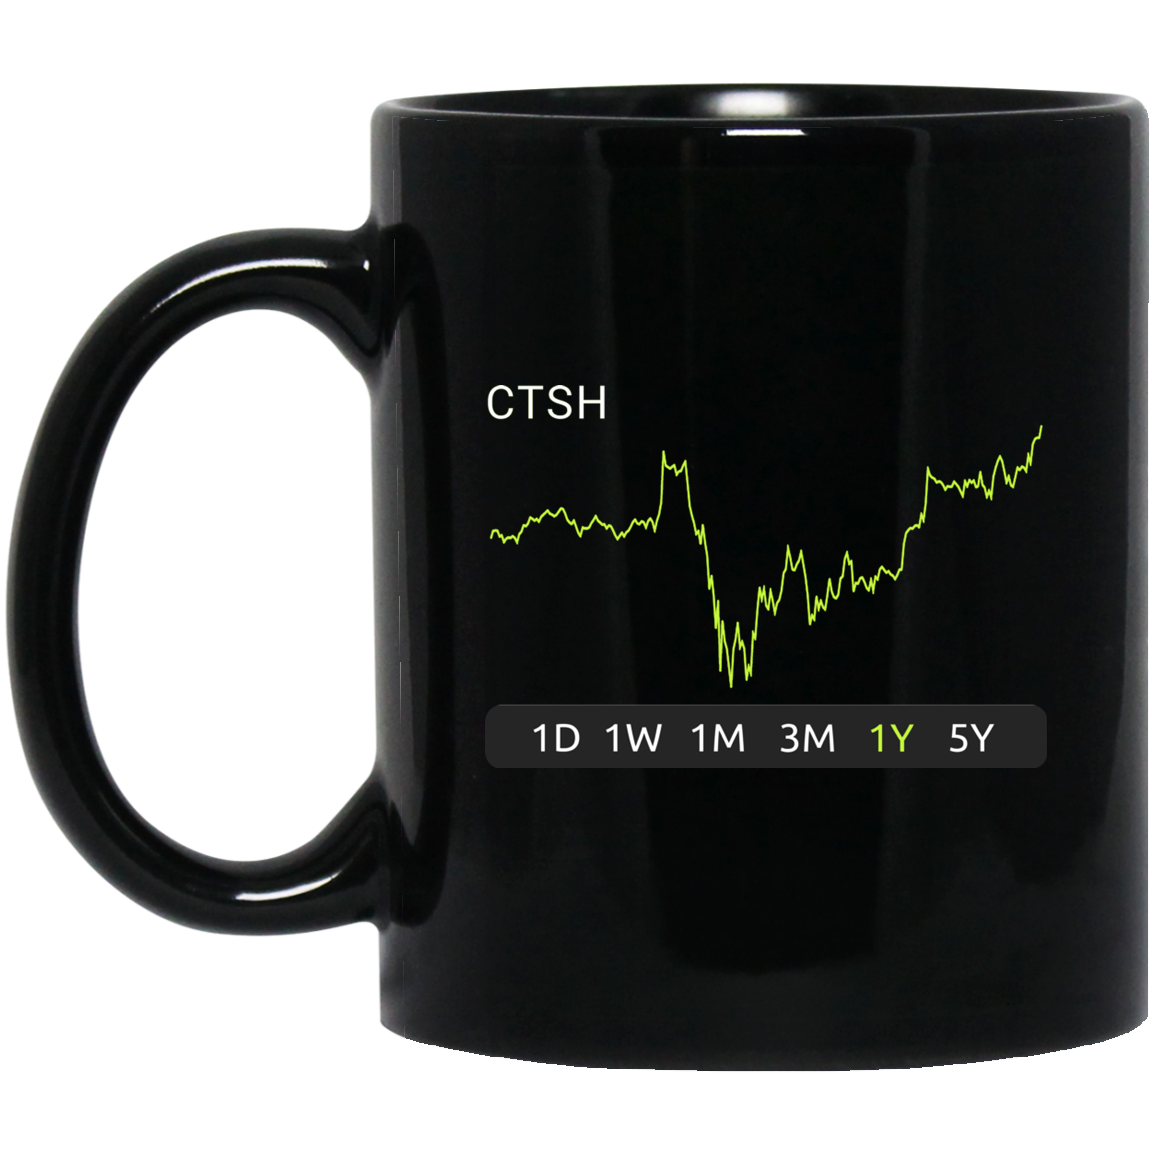 CTSH Stock 1y Mug